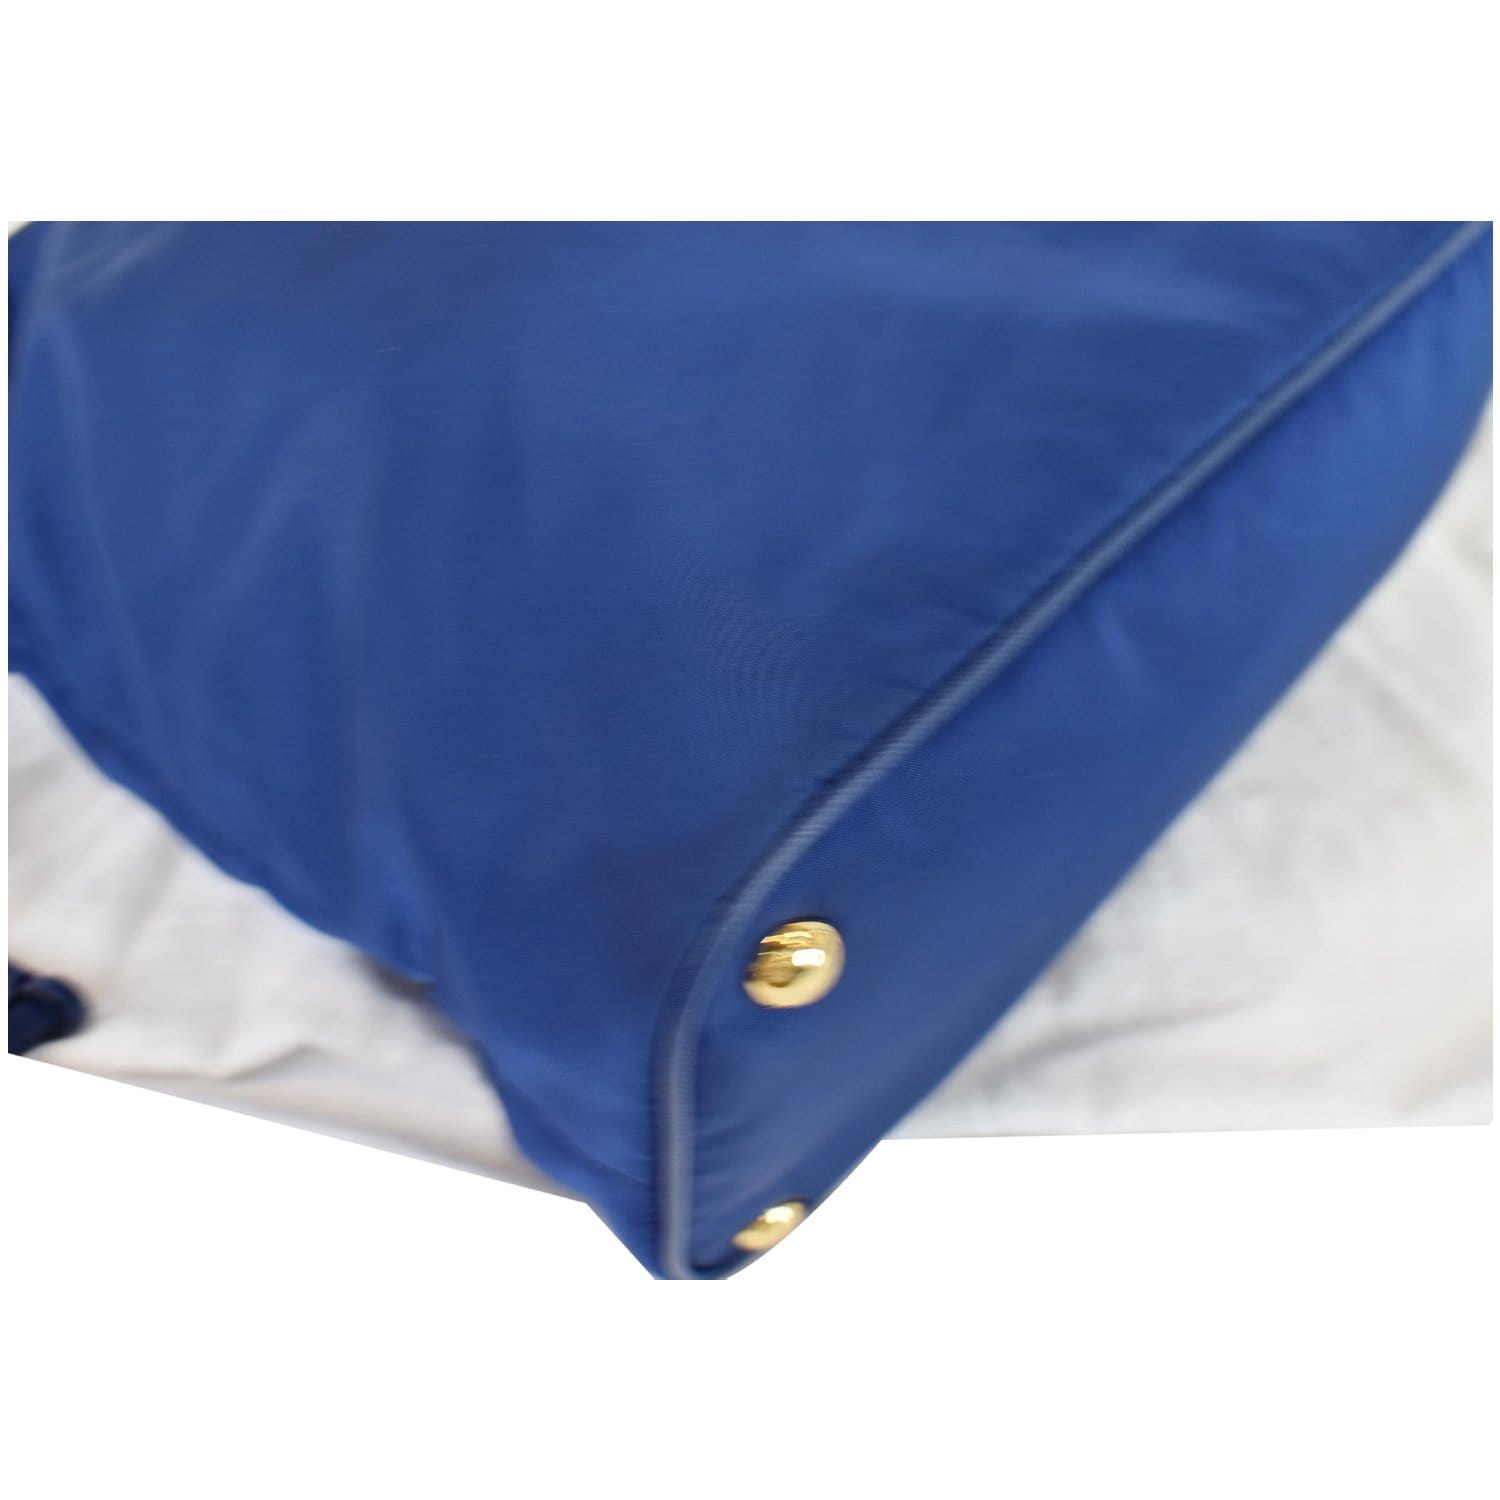 Prada Tessuto Nylon Saffiano Leather Tote Bag Blue